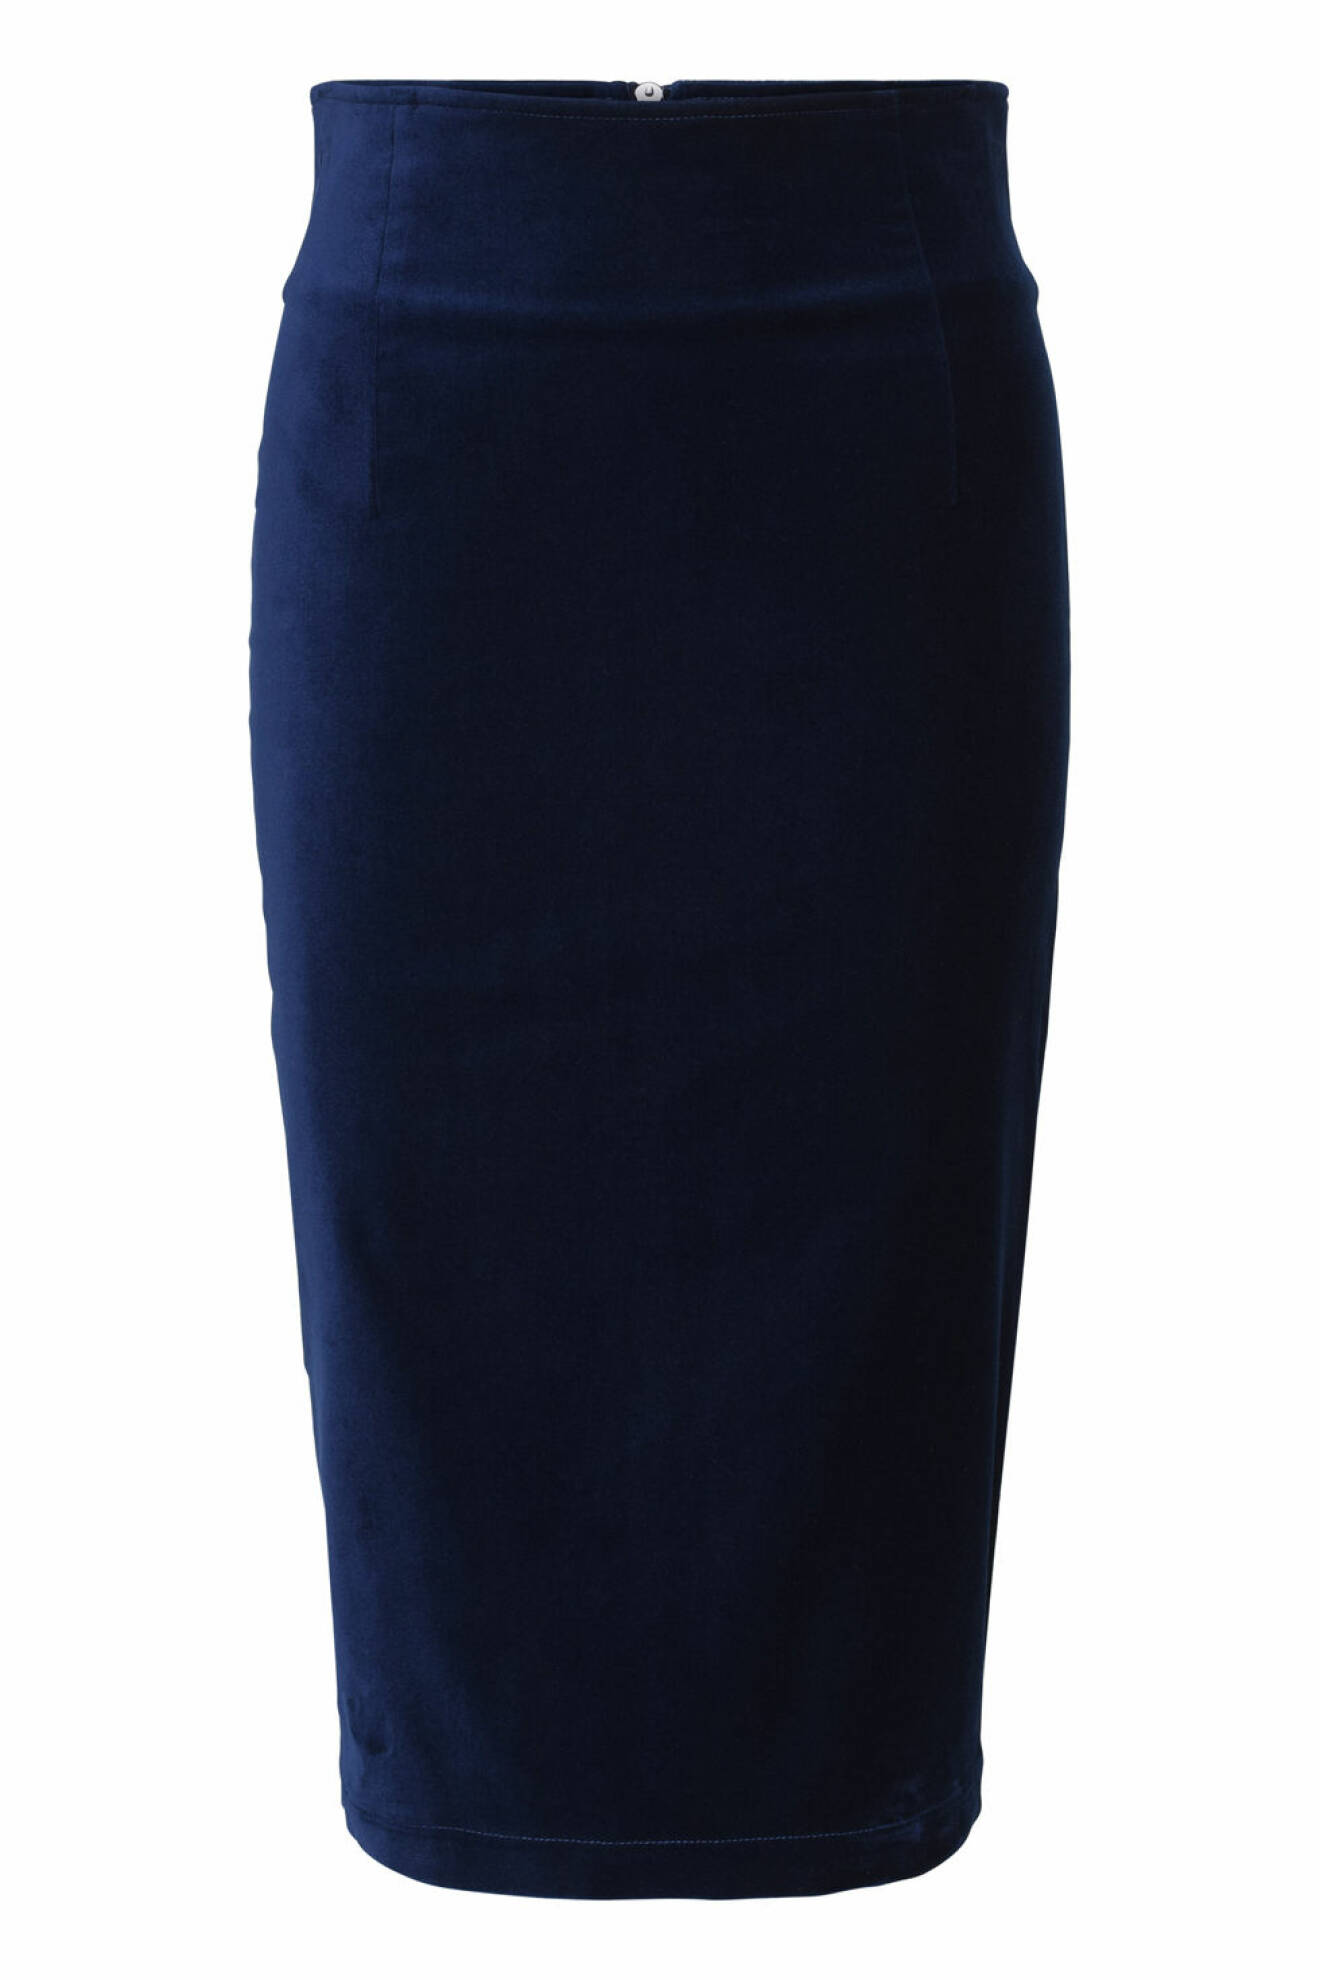 Maria Westerlind x MQ blå kjol